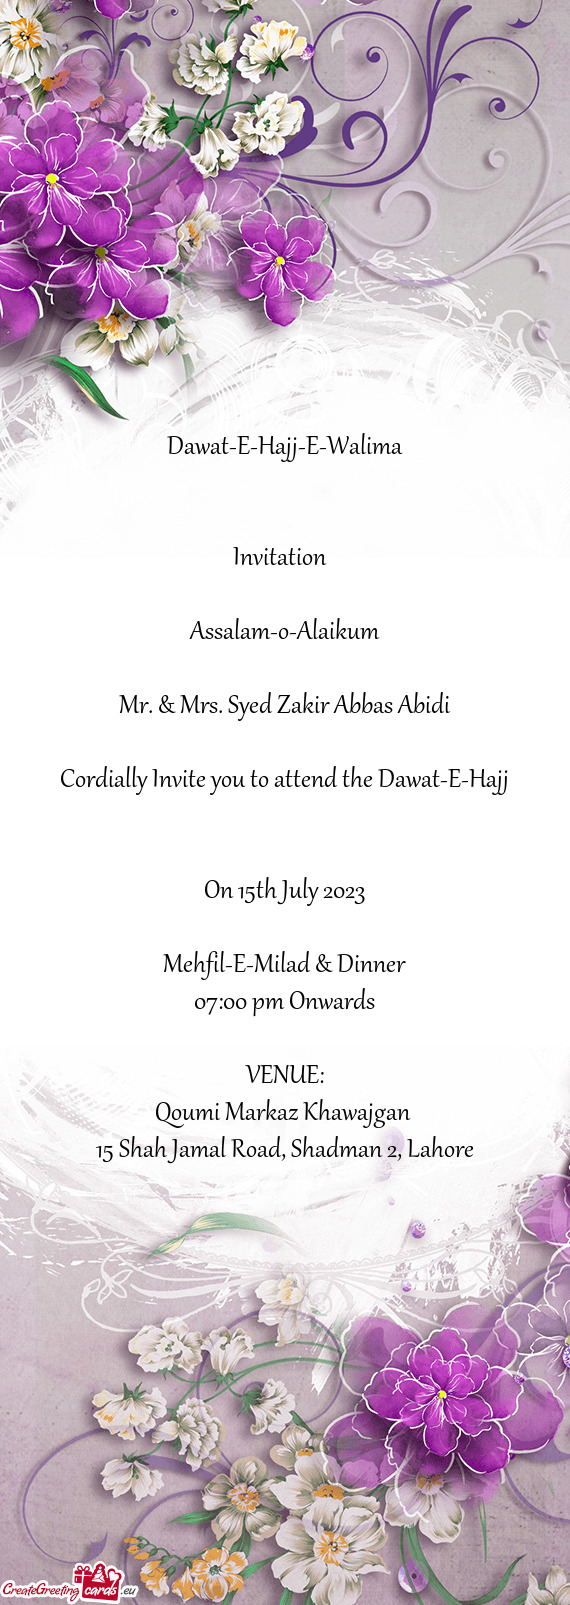 Mr. & Mrs. Syed Zakir Abbas Abidi